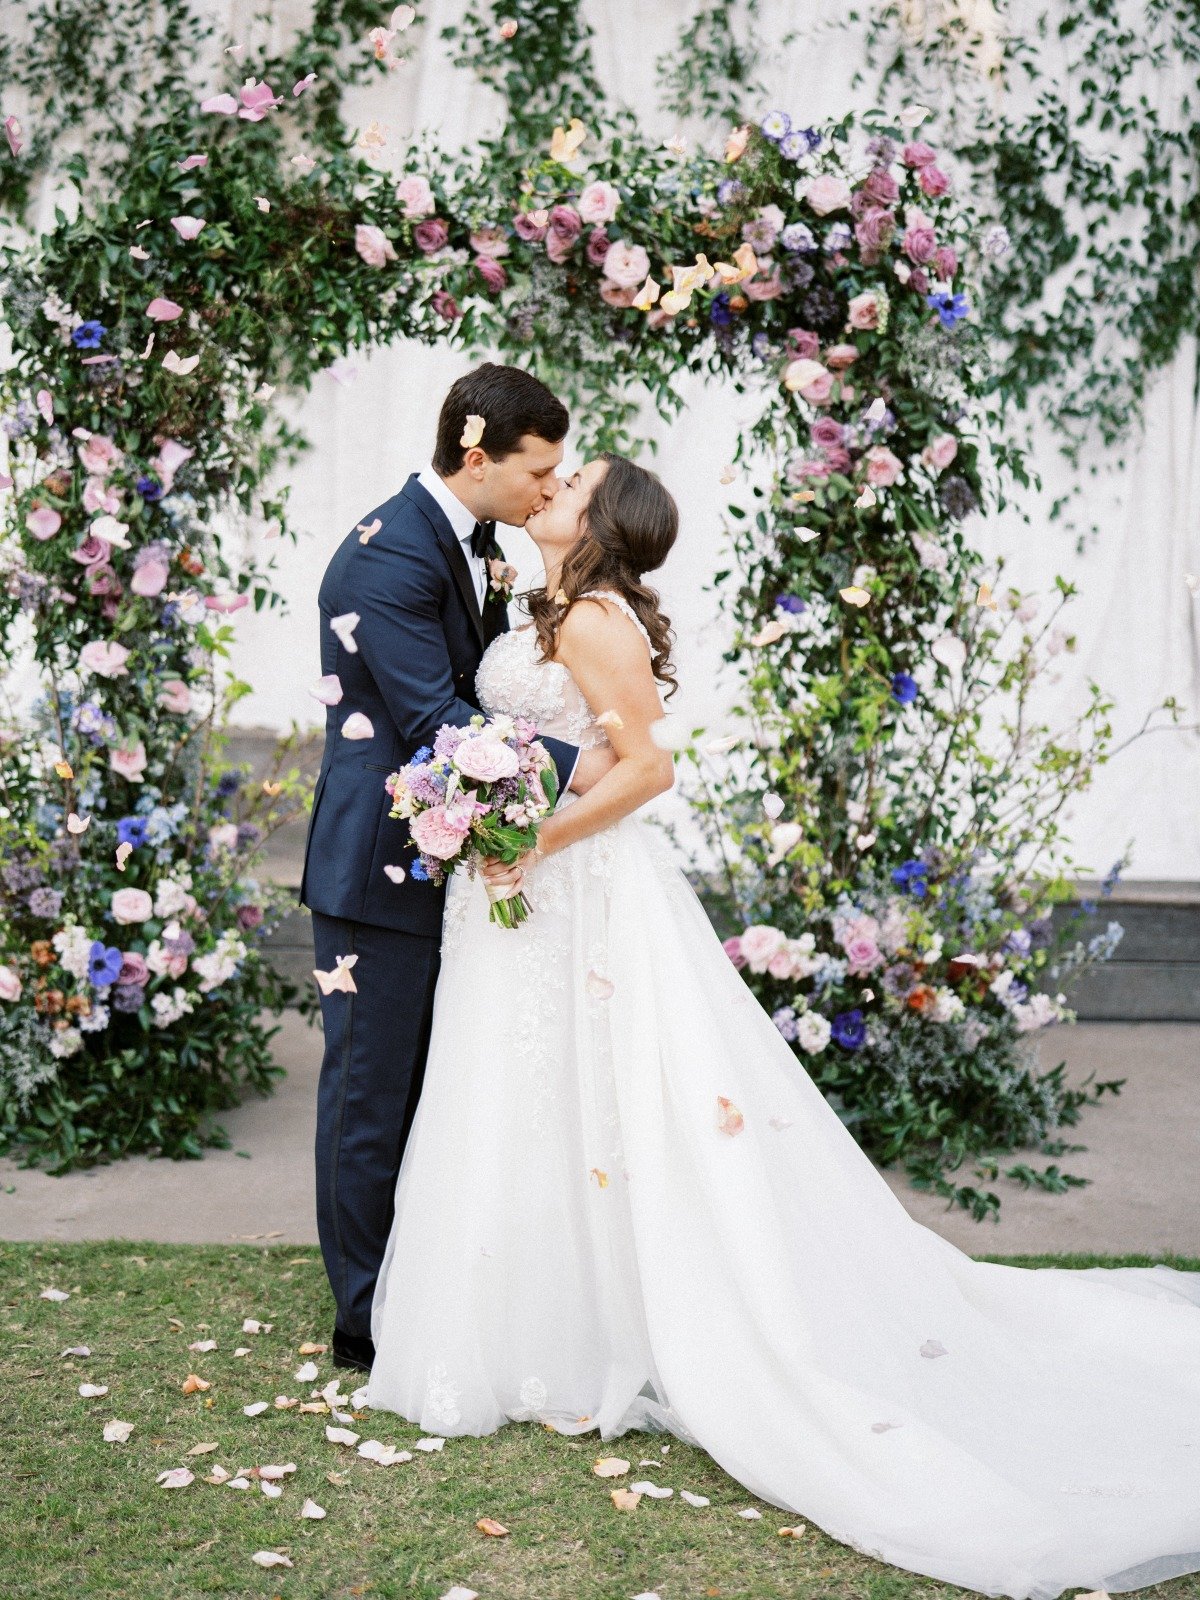 applique floral bridal ballgown